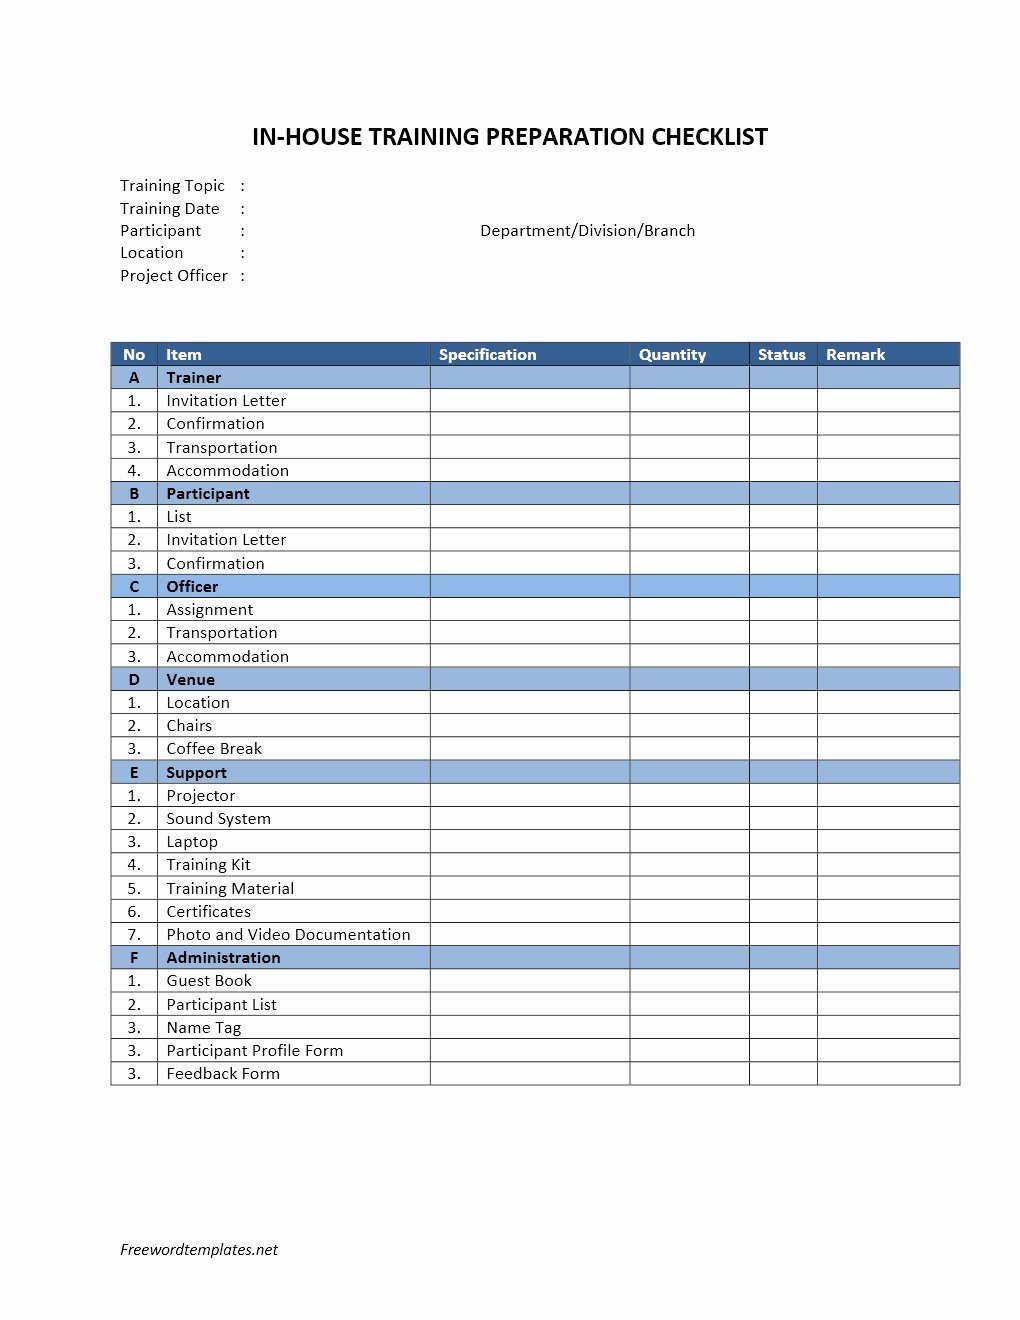 Employee Training Checklist Template New In House Training Preparation Checklist